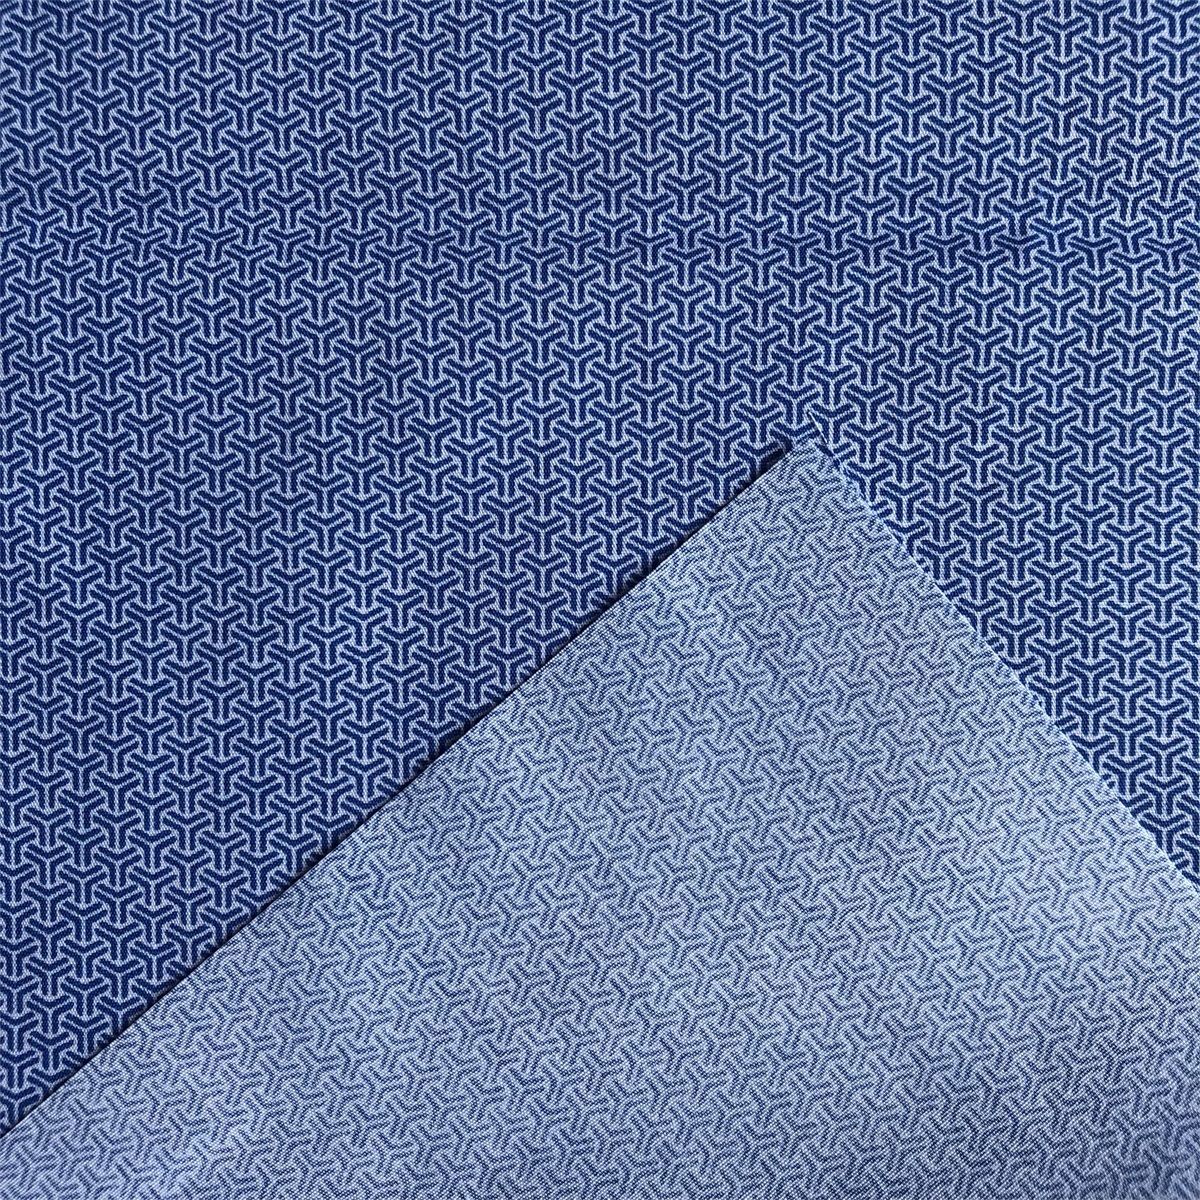 Sun-rising Textile Cotton fabric soft comfortable 100% cotton poplin printed shirts woven fabric for men's casual shirts